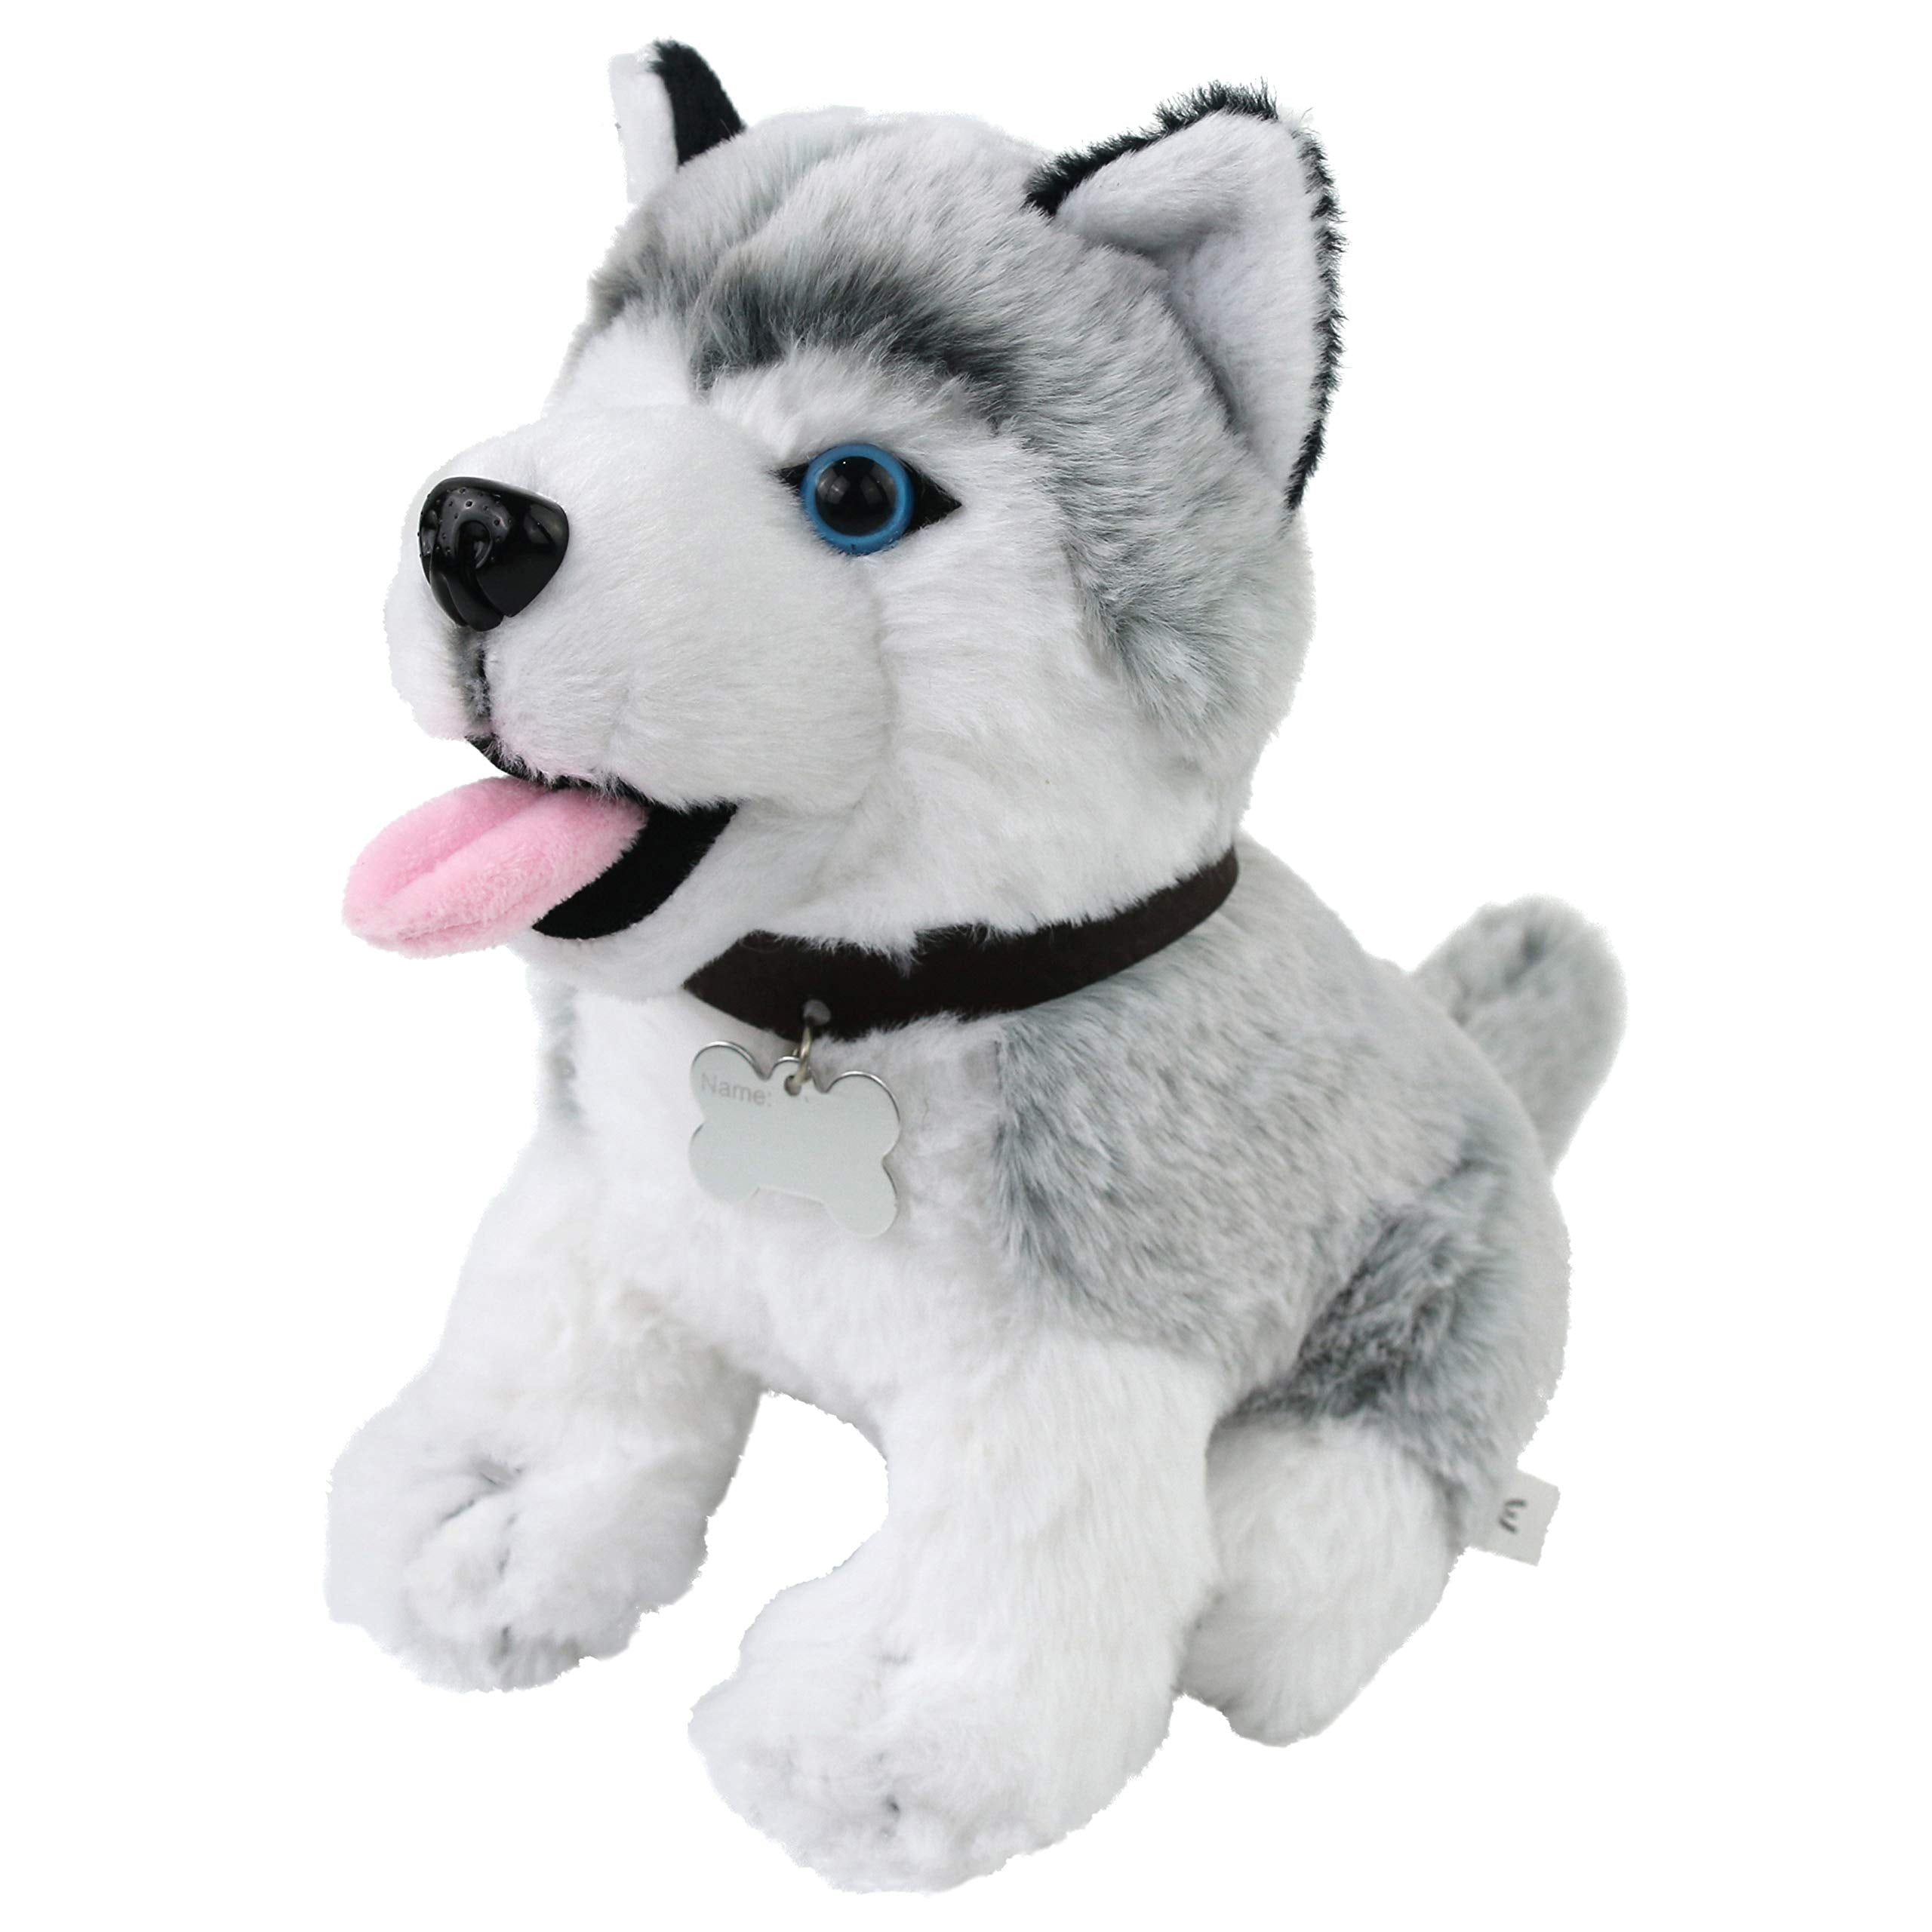 Athoinsu Light up Stuffed Husky Puppy Dog Soft Plush Toy with Magic Lights, 8'' - Glow Guards